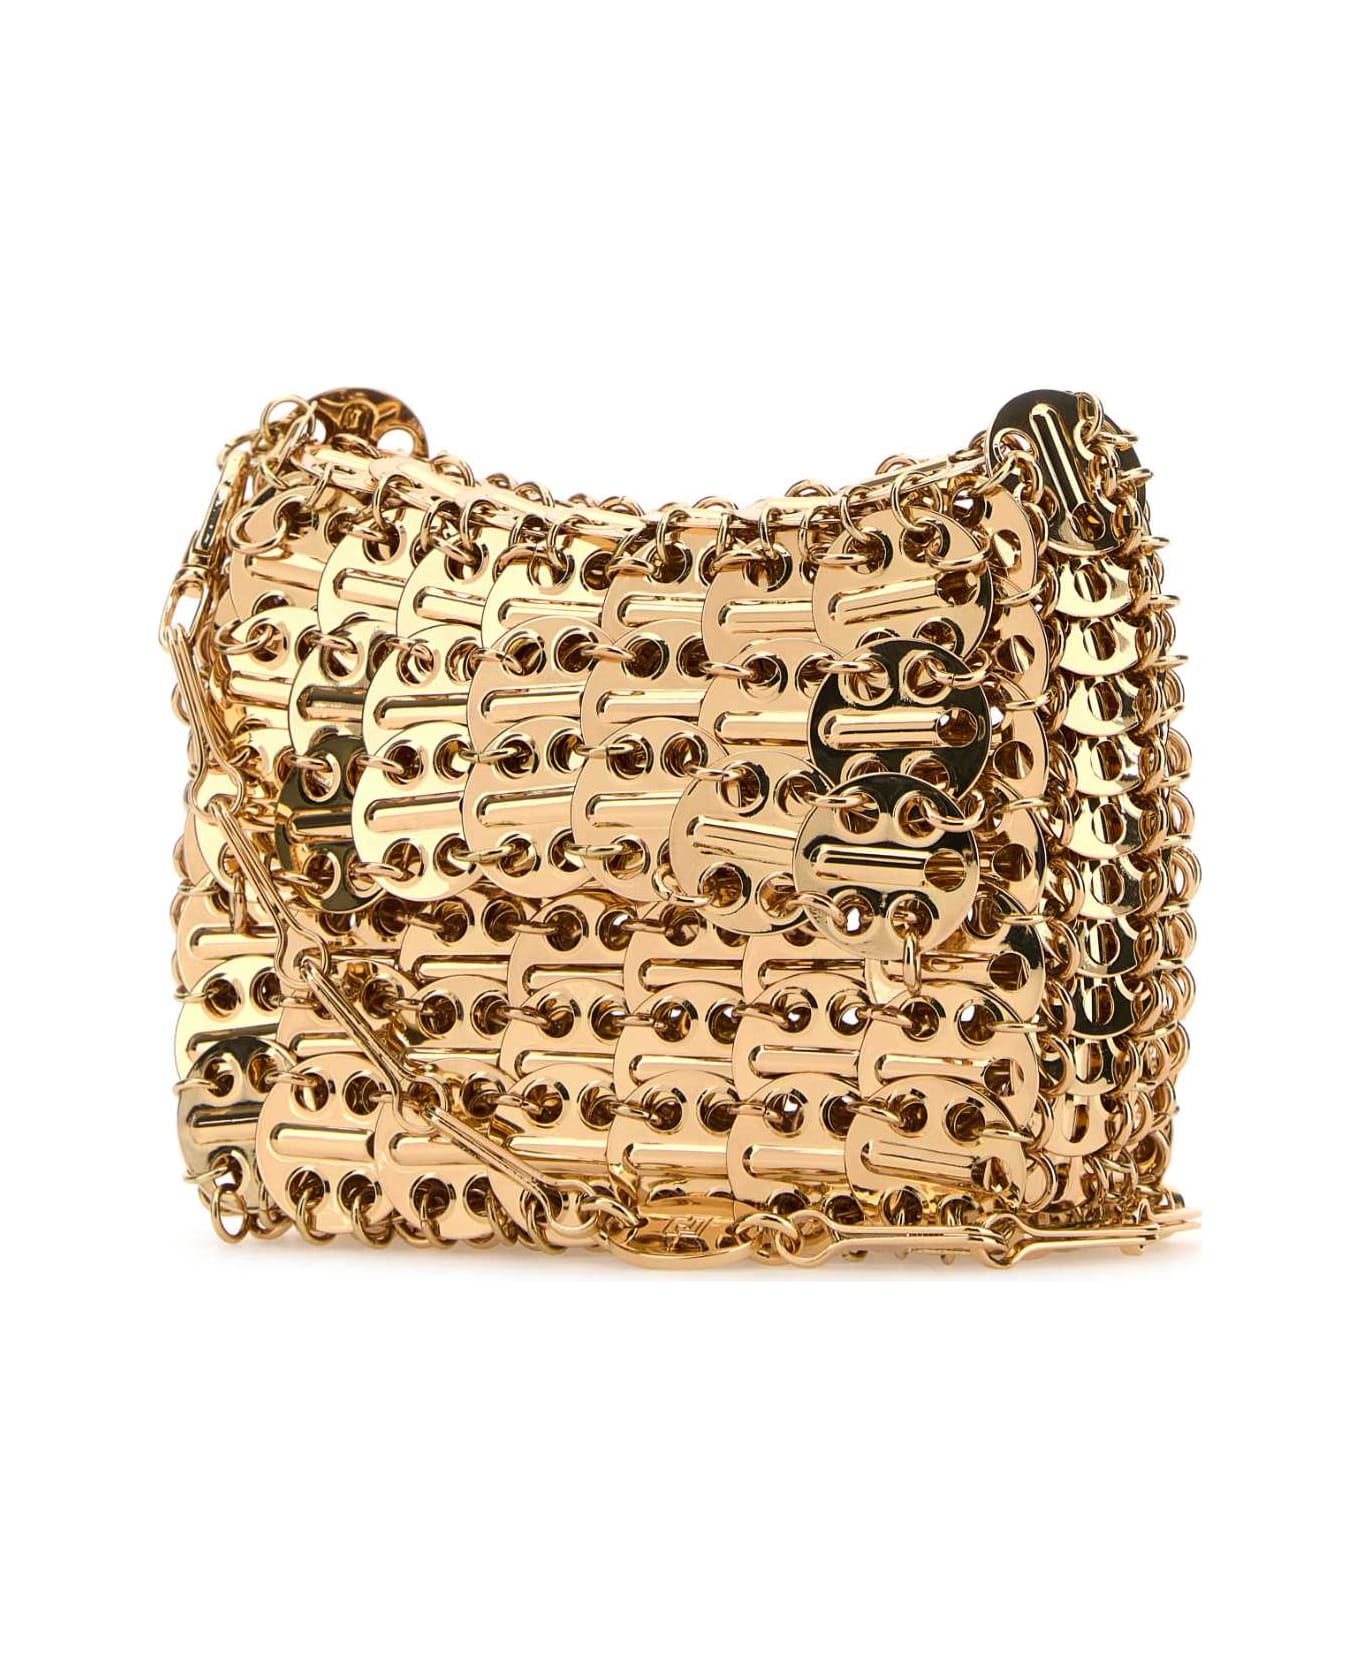 Paco Rabanne Gold Chain Mail Shoulder Bag - LIGHTGOLD